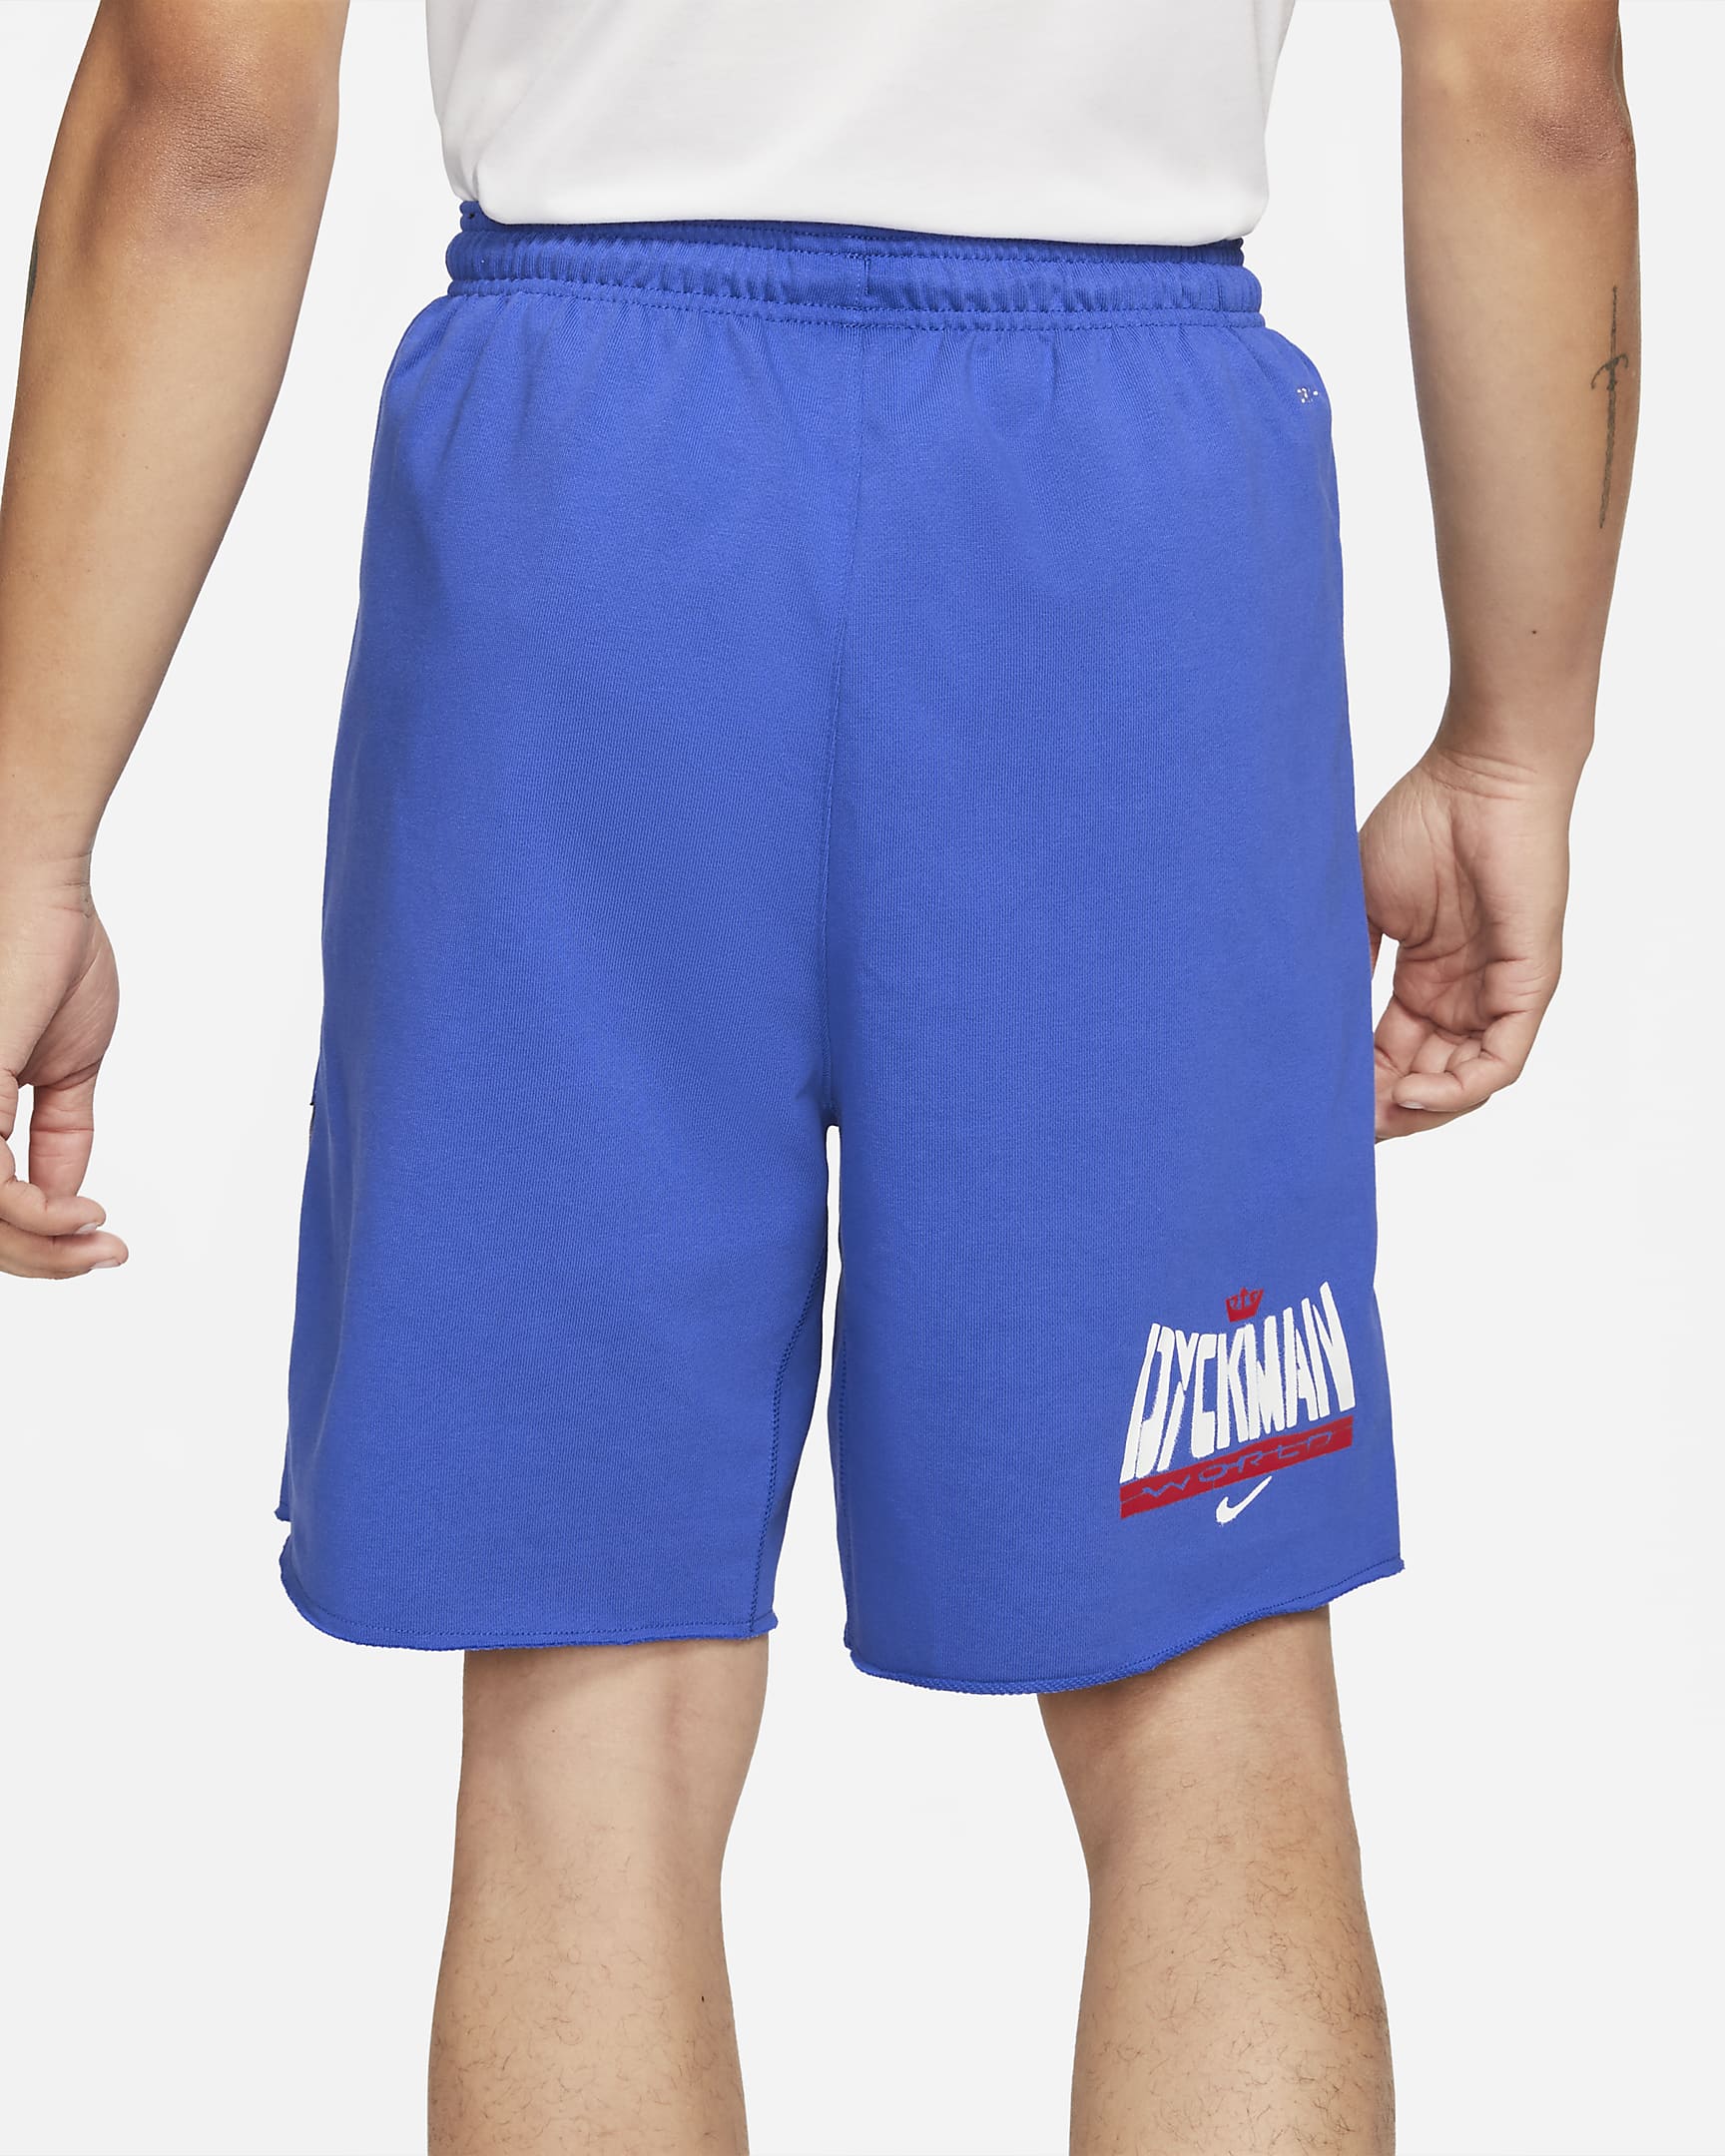 standard-issue-dyckman-mens-basketball-fleece-shorts-BwjwhC-2.png